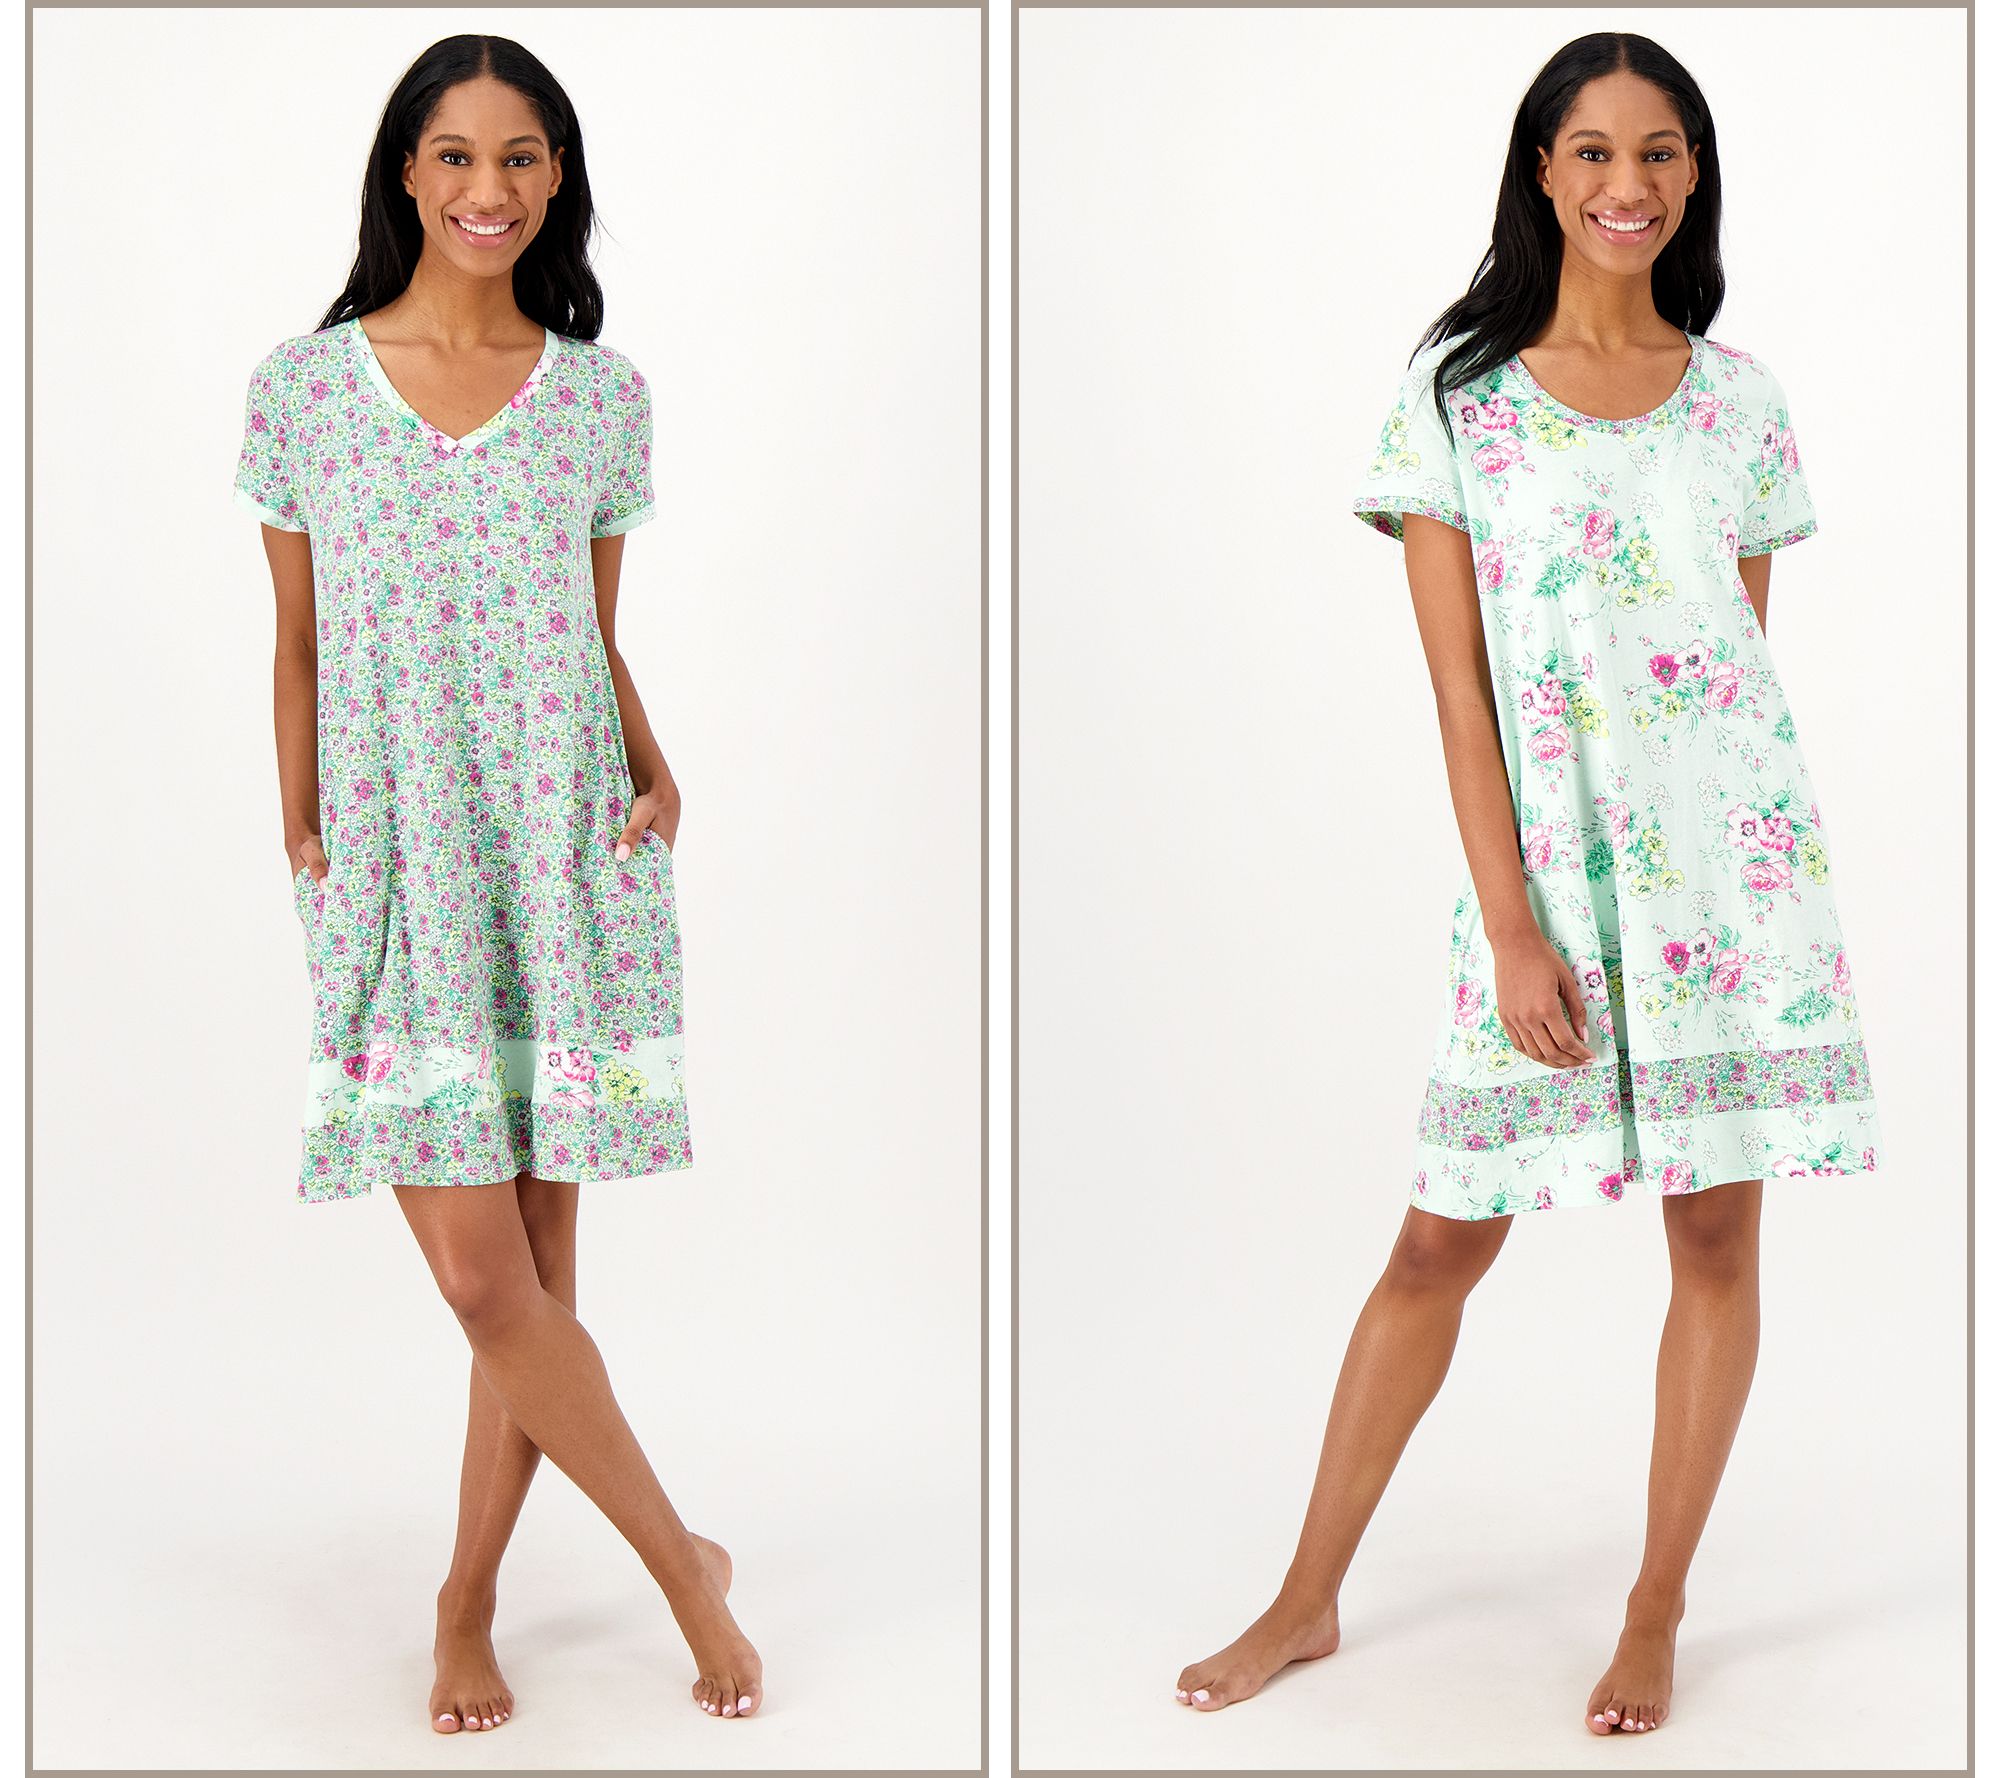 Aqua Floral Cotton Short Nightgown – Carole Hochman